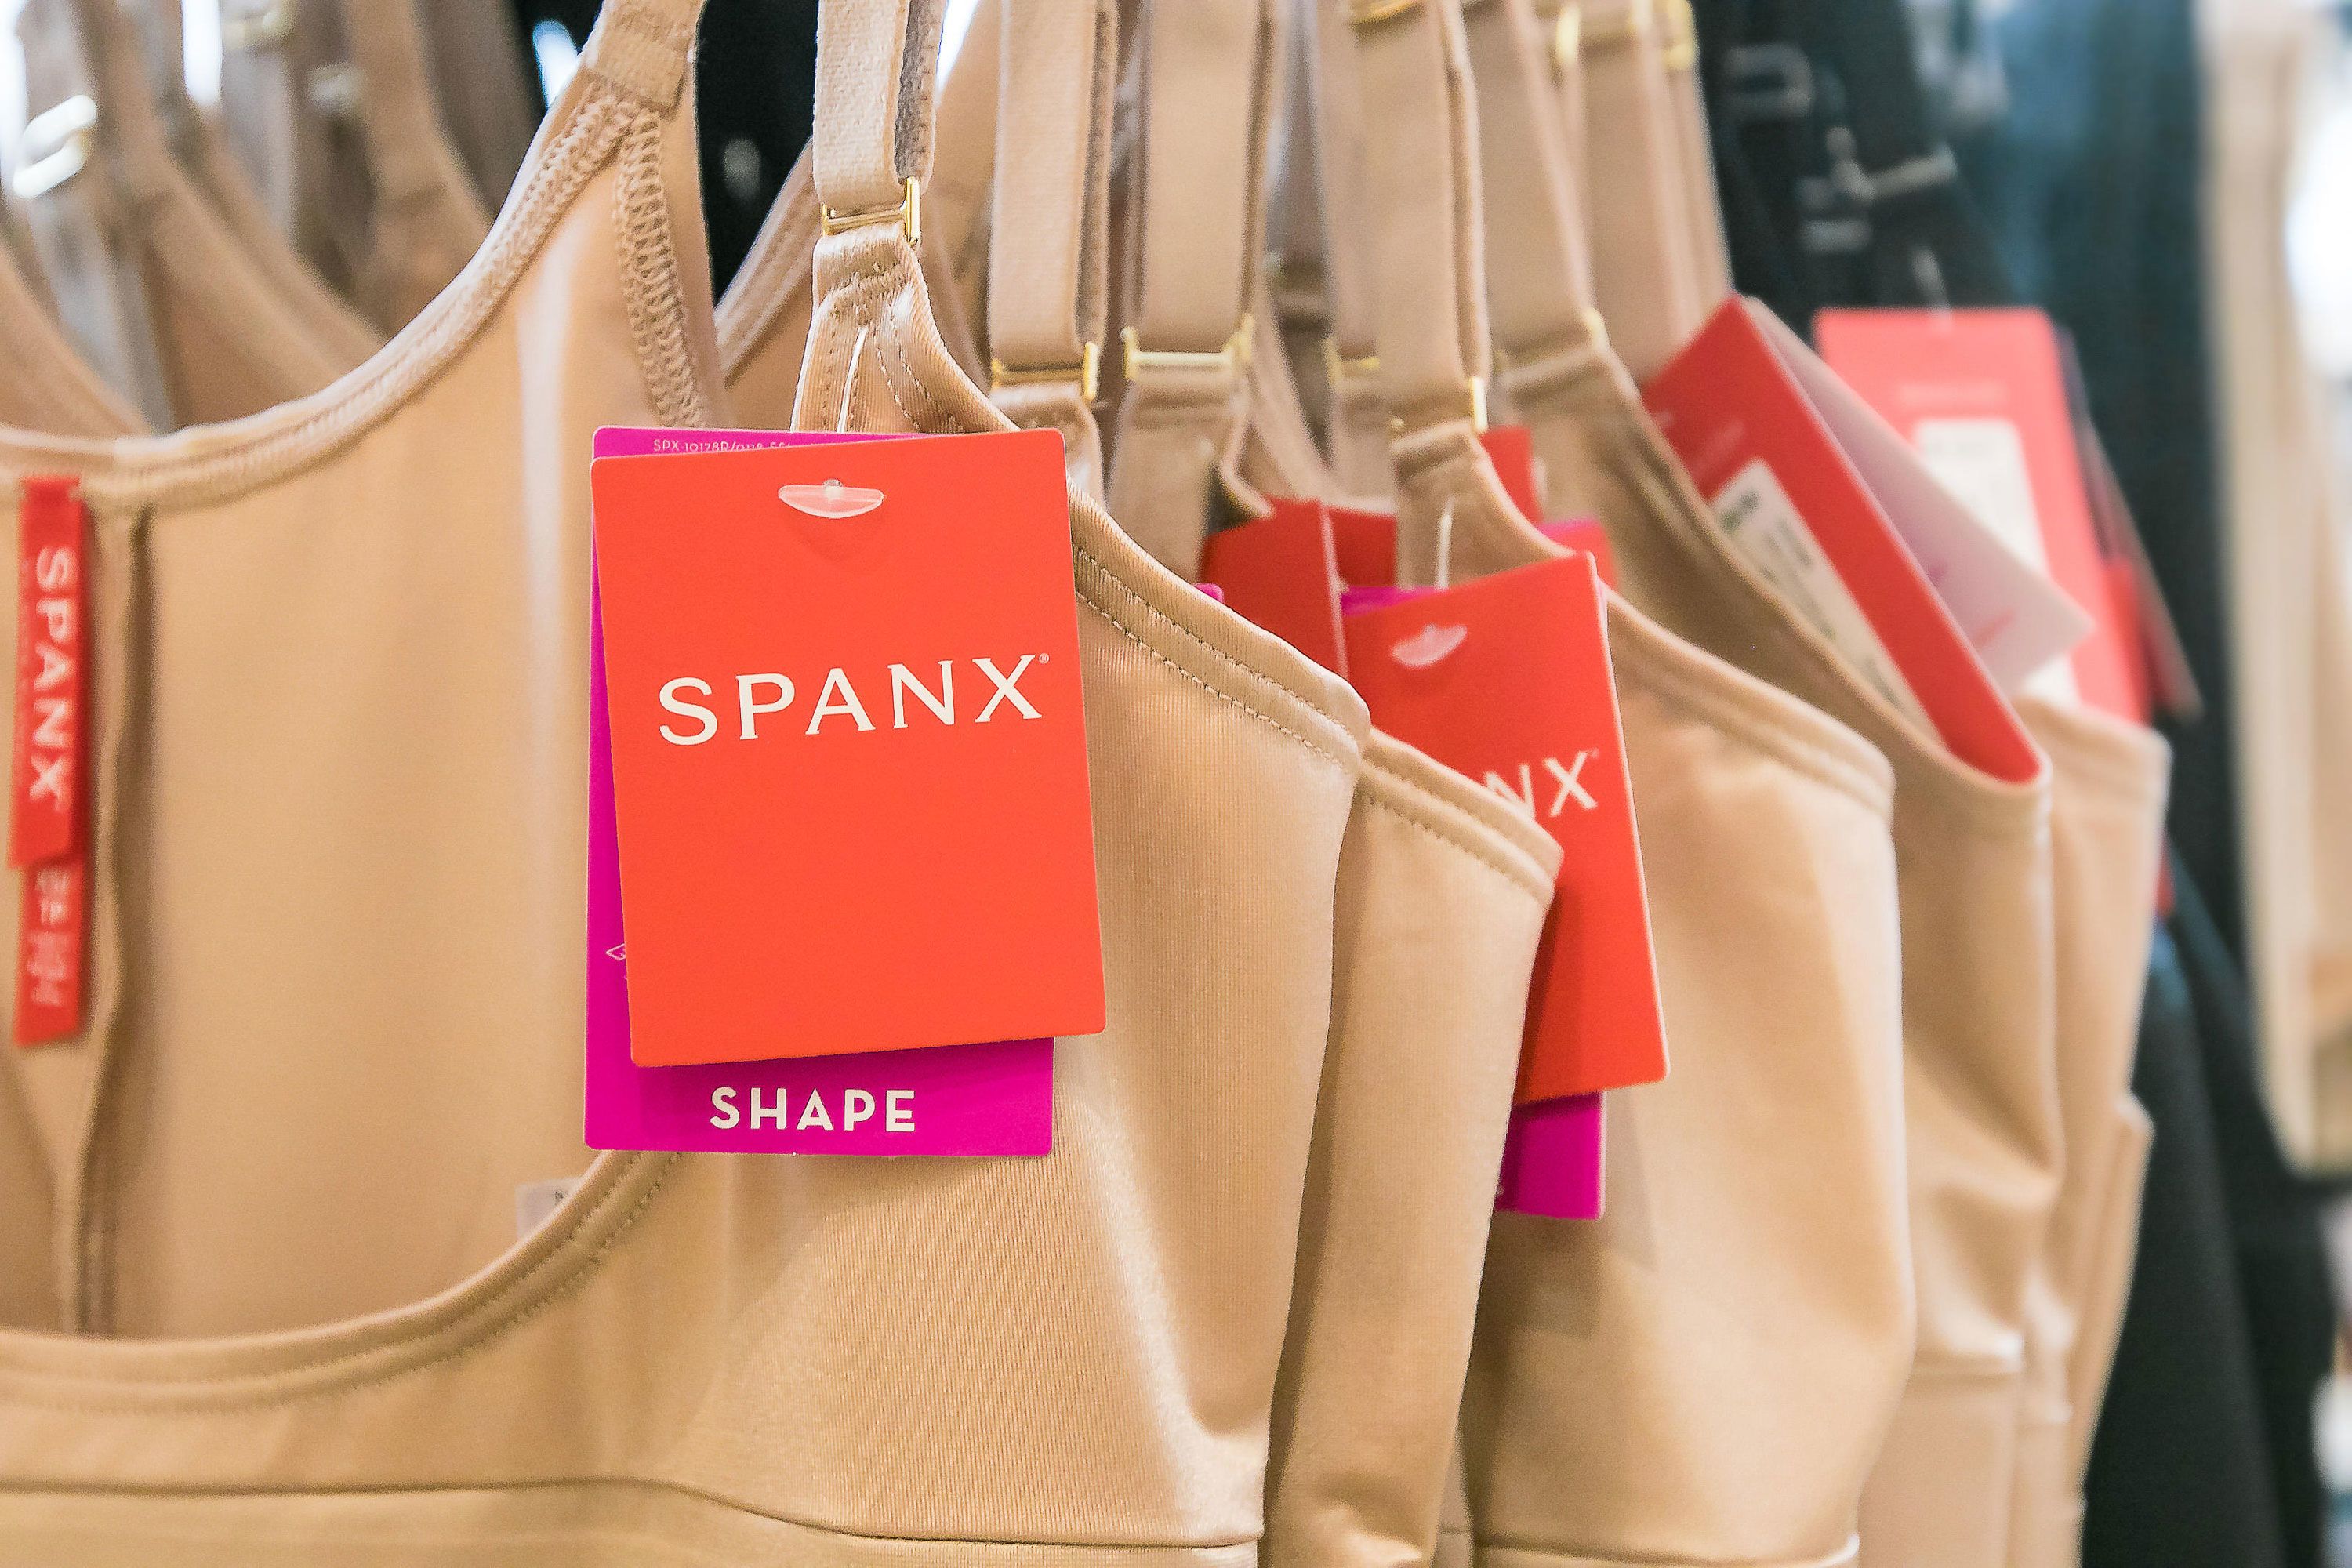 THE FASHION LAW BLOG: Shapewear Wars: Spanx Files Complaint